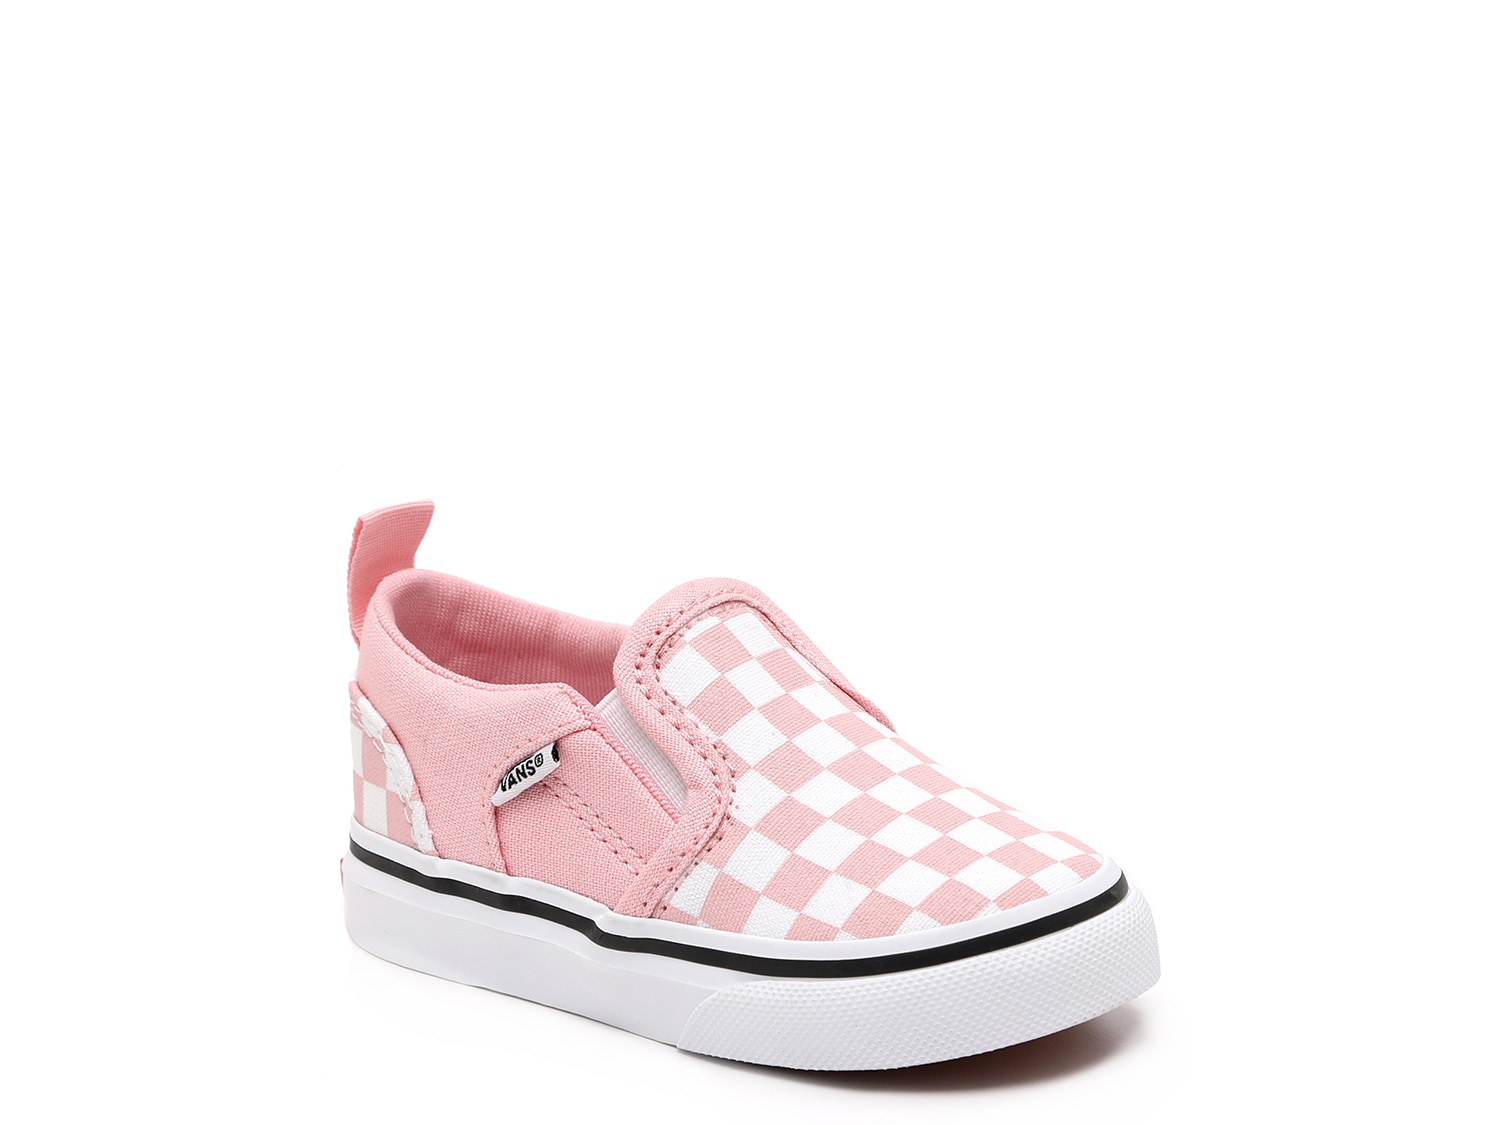 Kids Shoes Pink Slip-On | DSW